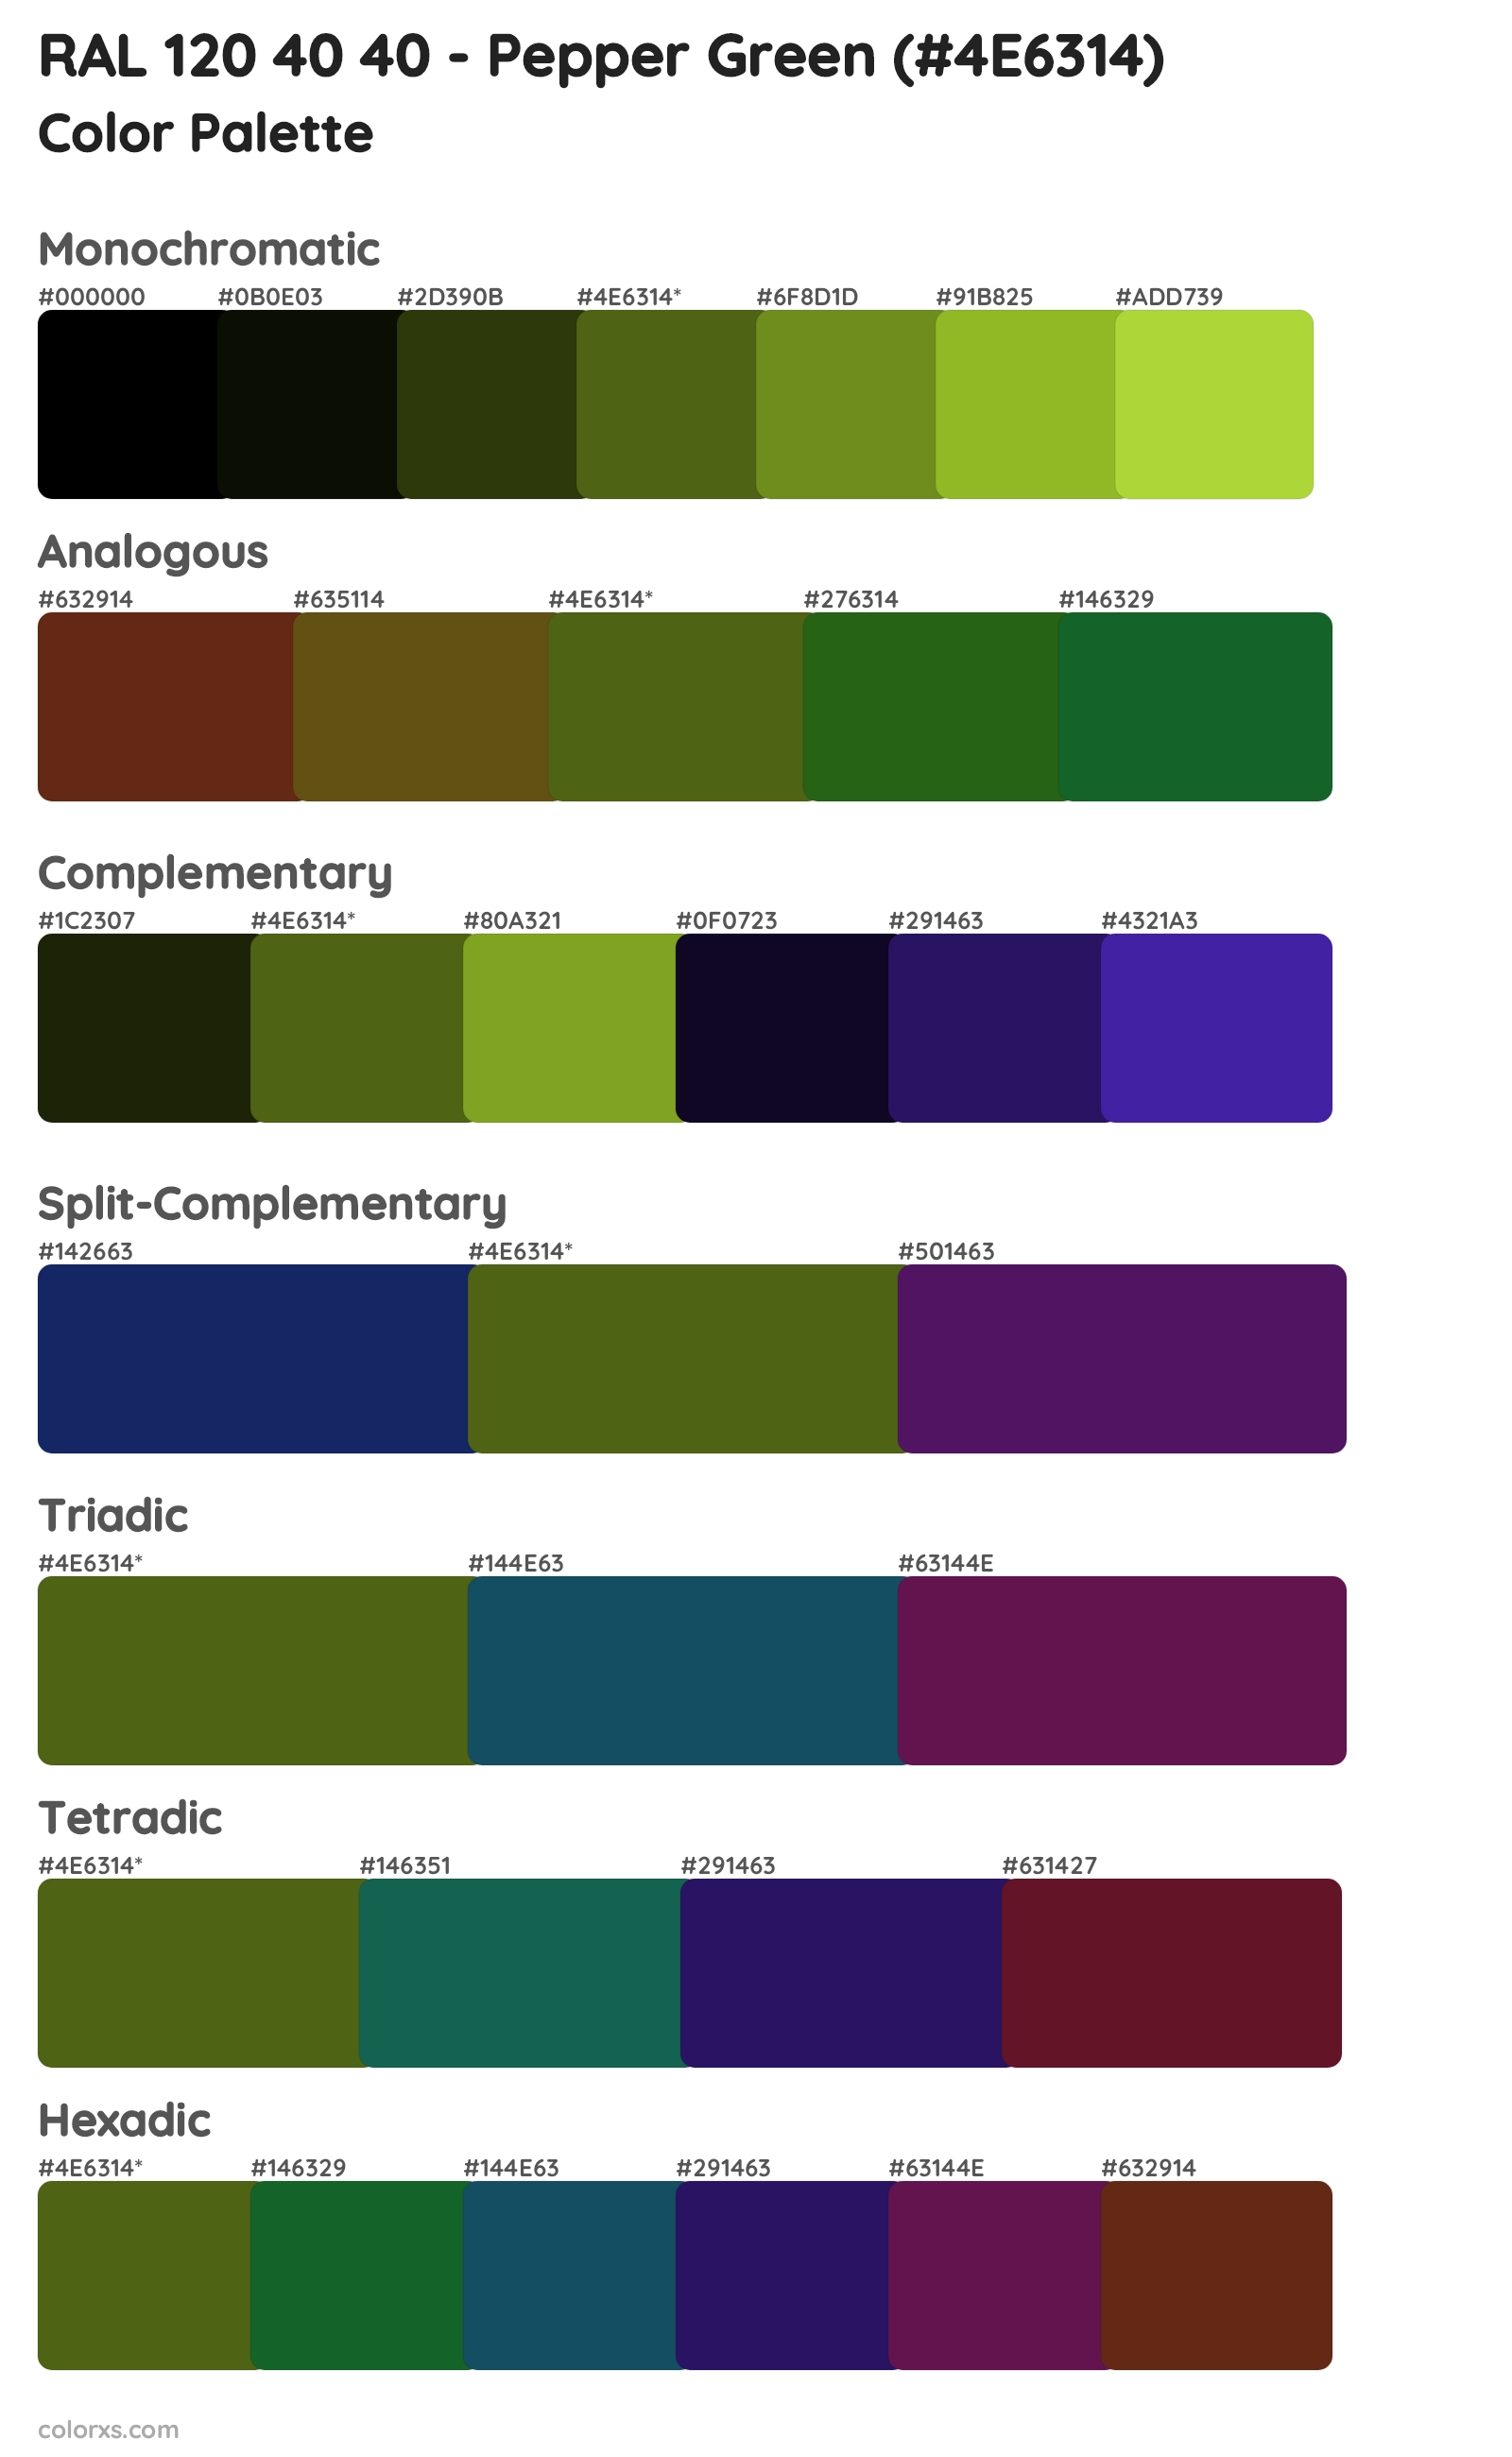 RAL 120 40 40 - Pepper Green Color Scheme Palettes